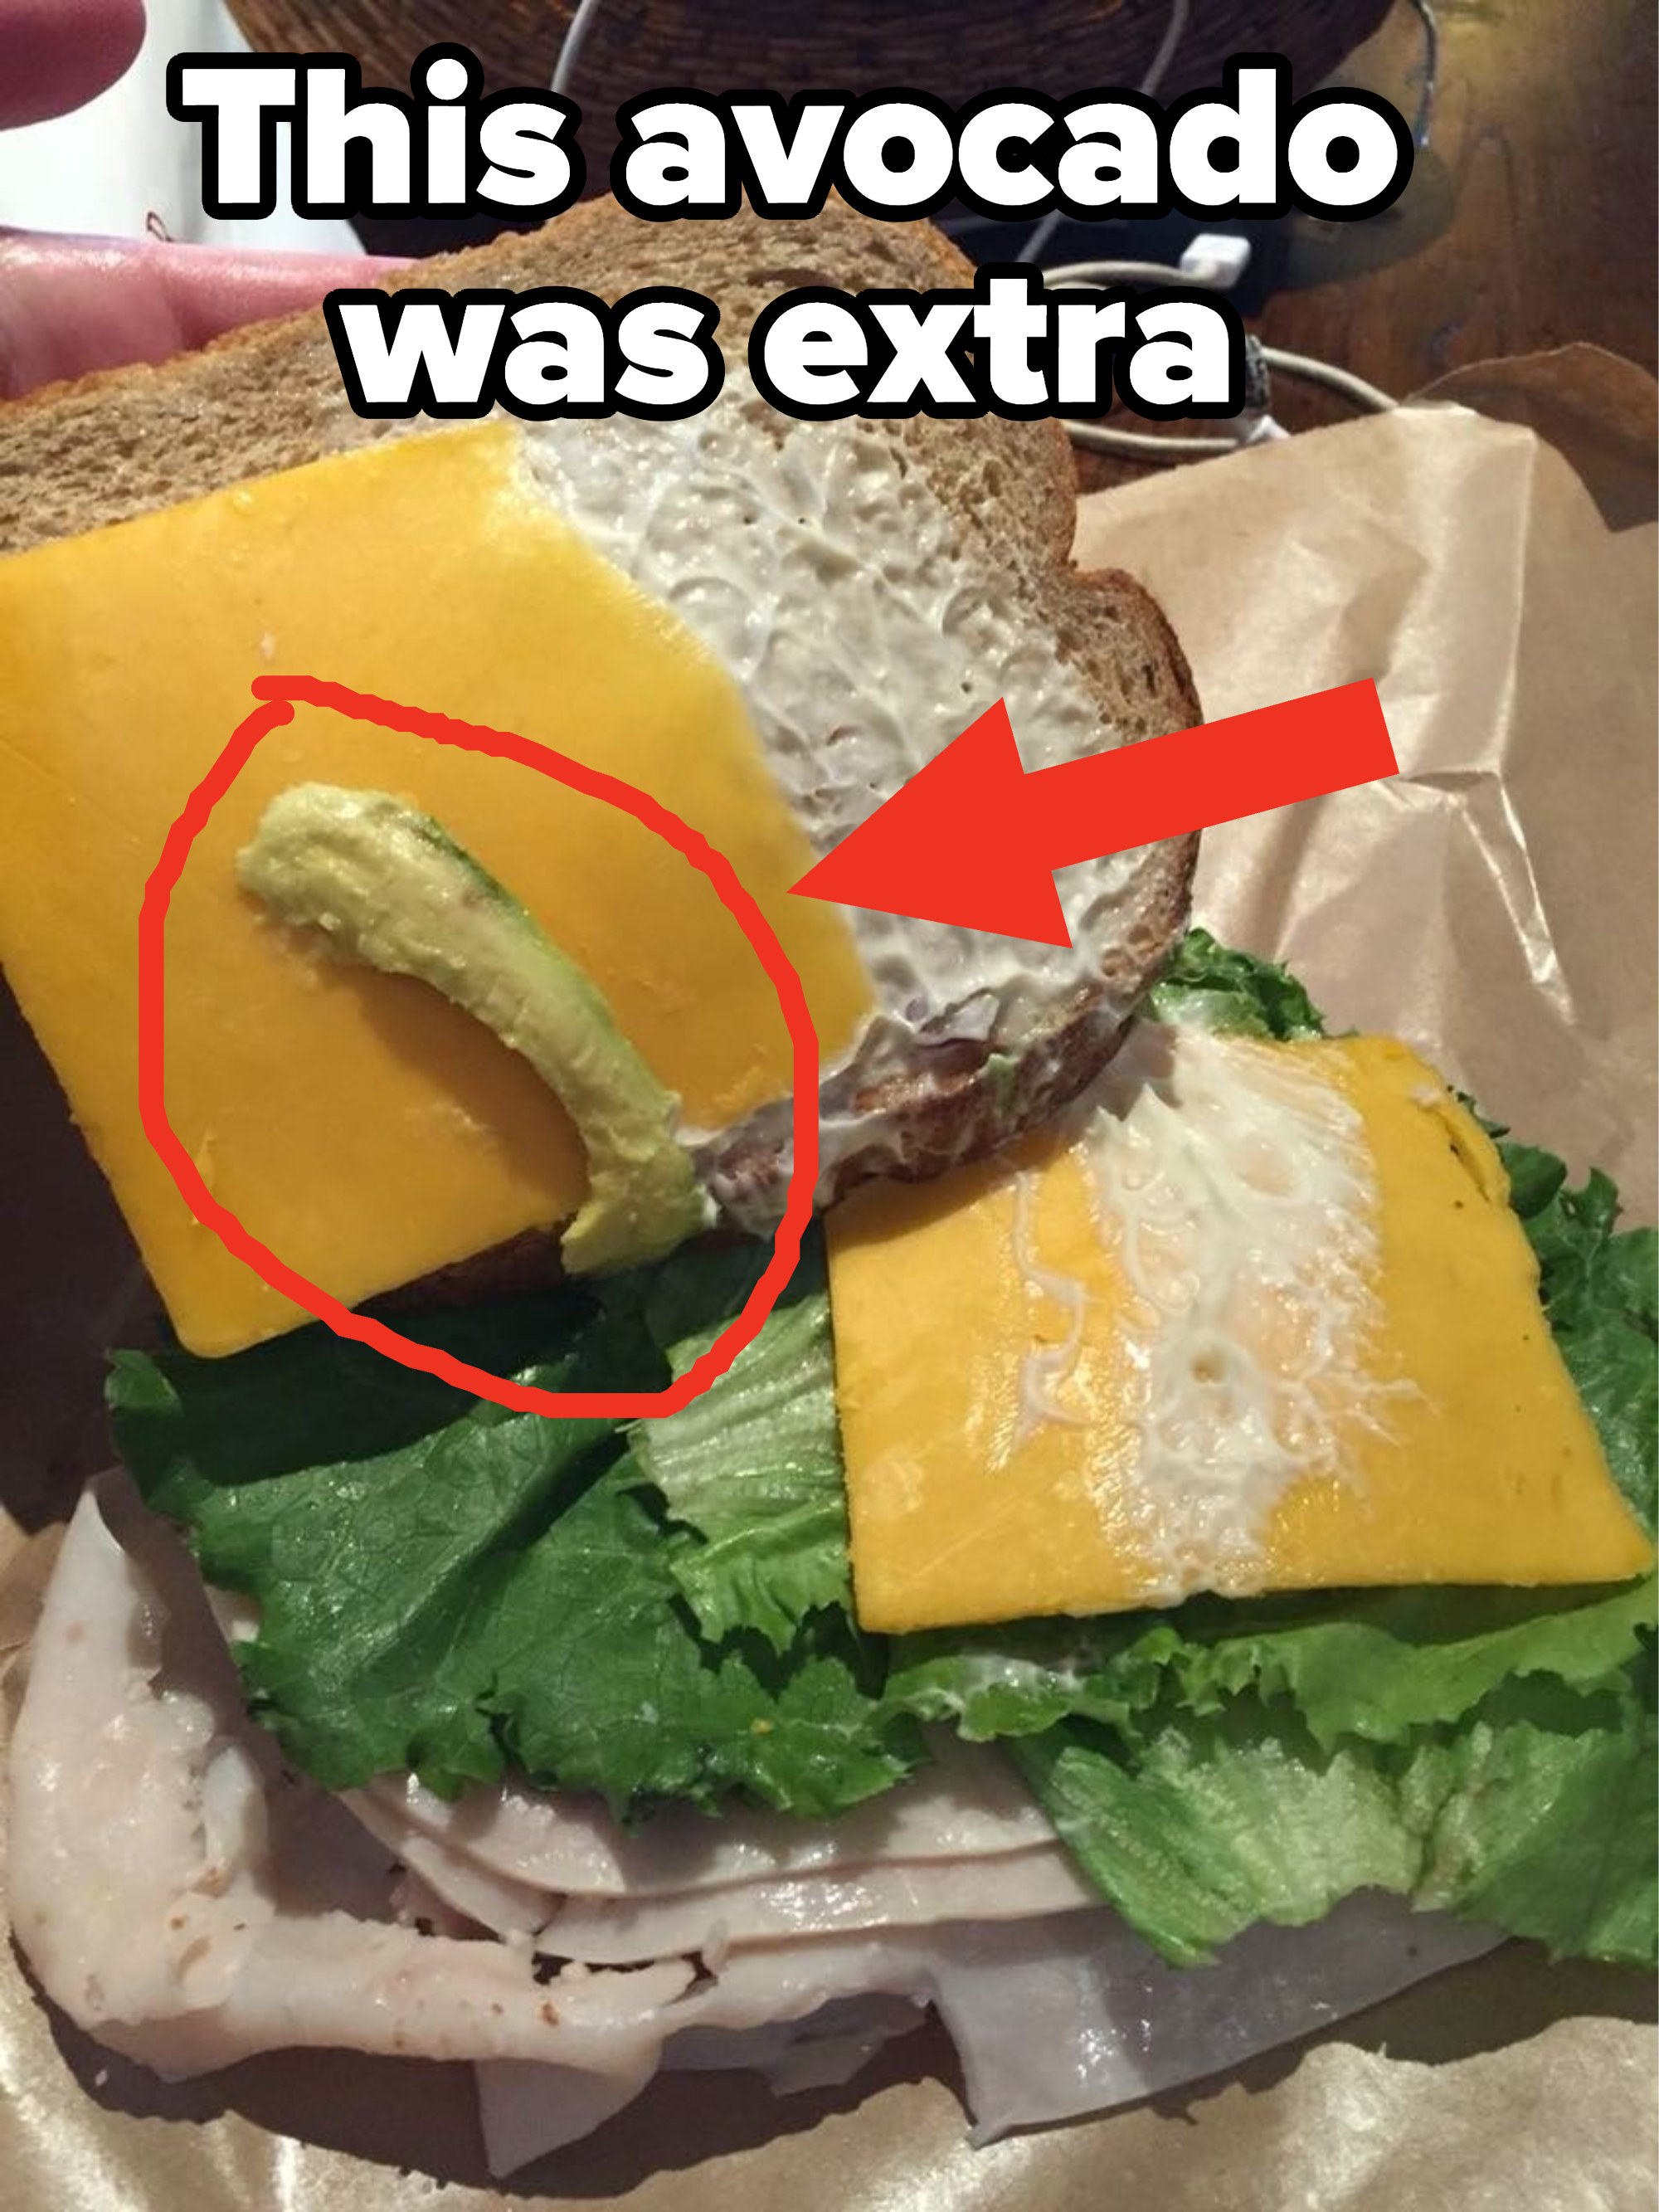 A small piece of avocado on a sandwich